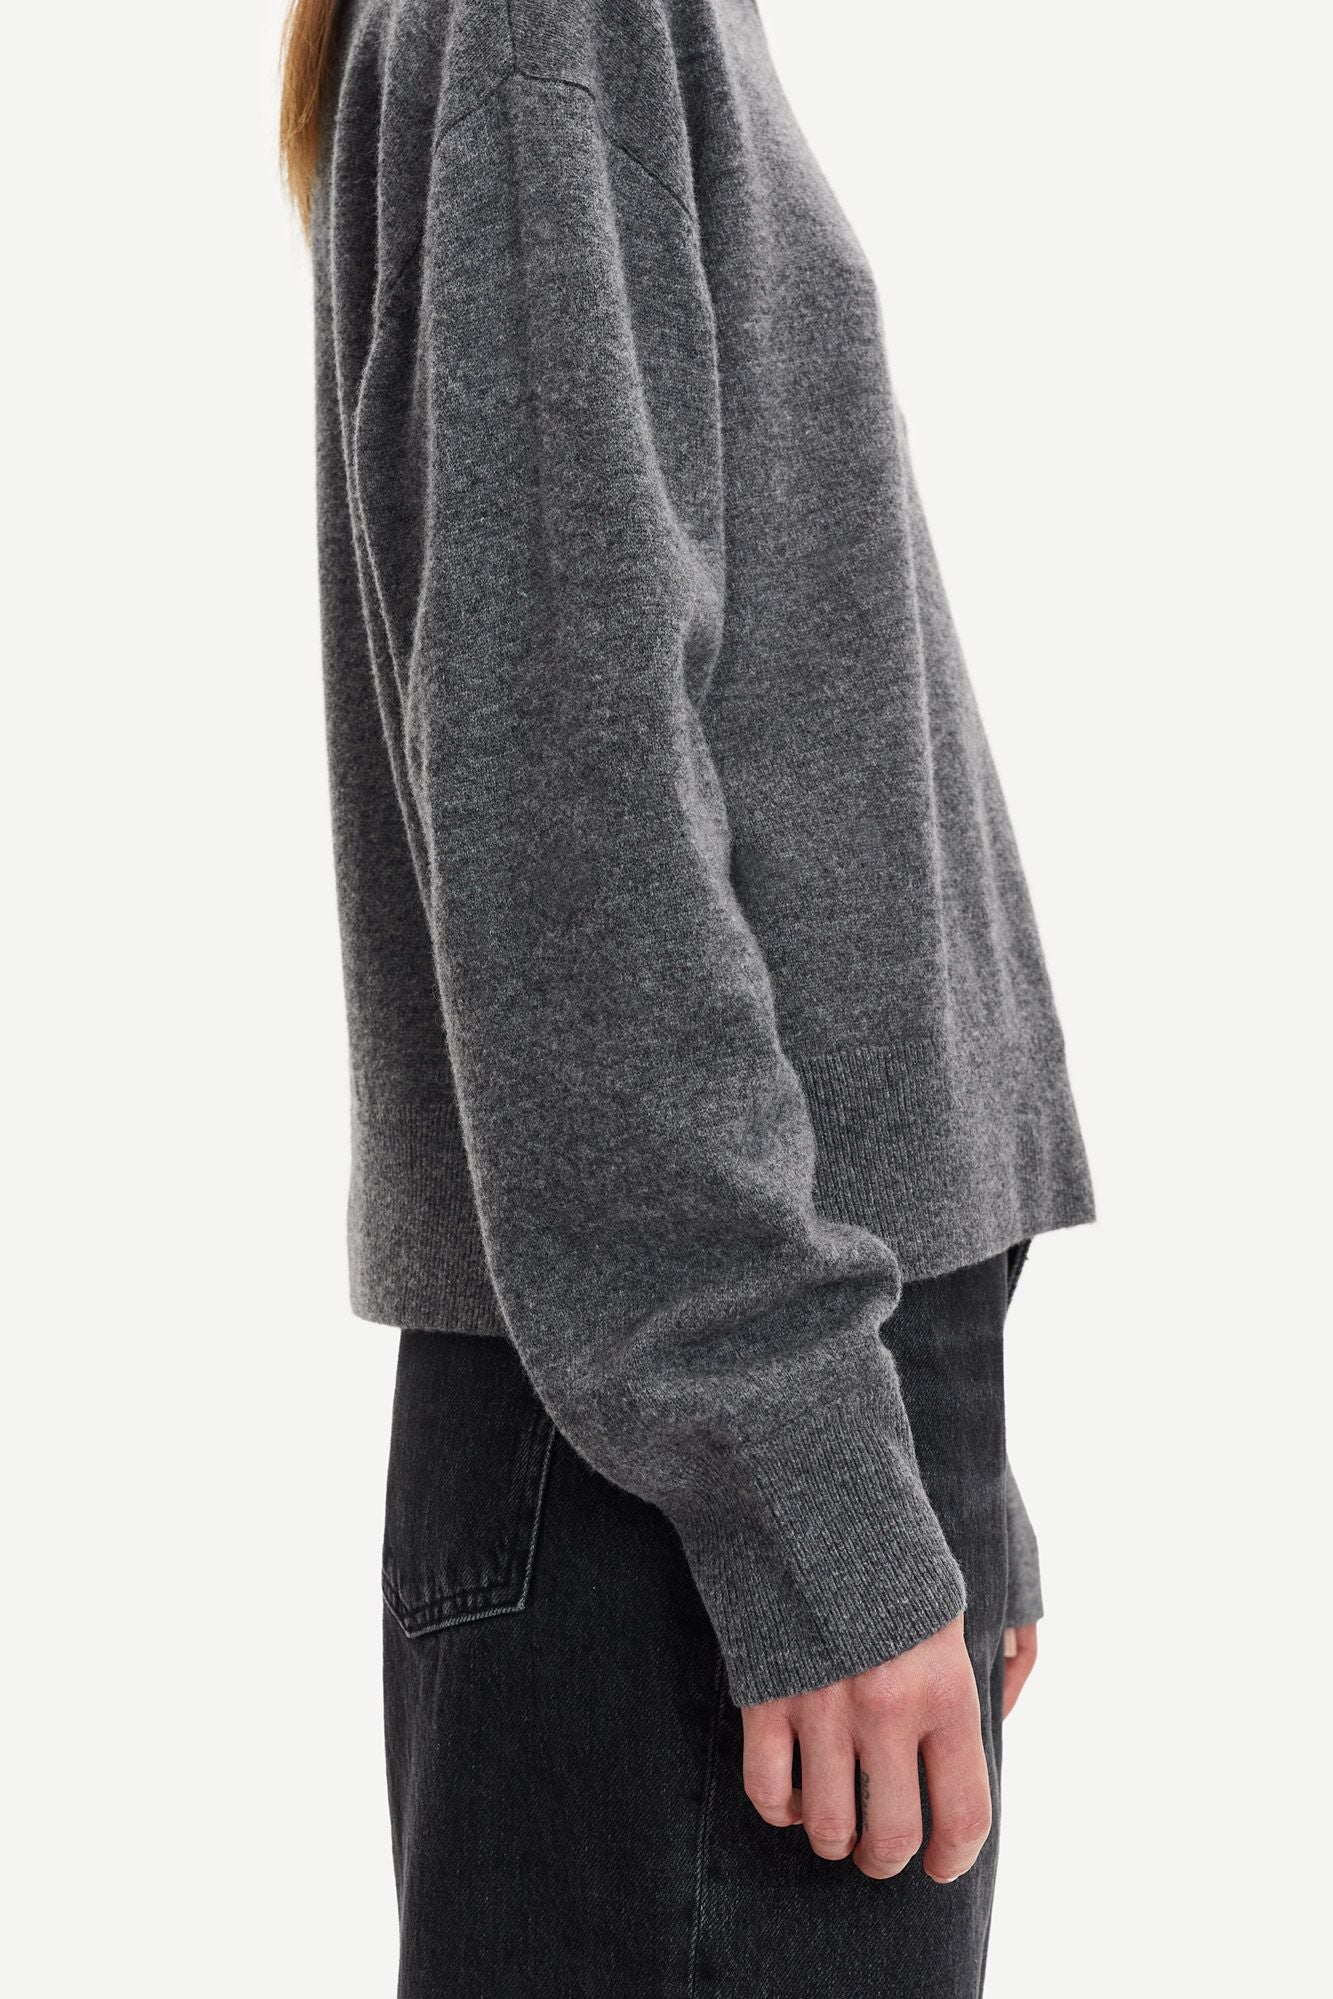 Amaris oversized wool sweater in dark grey